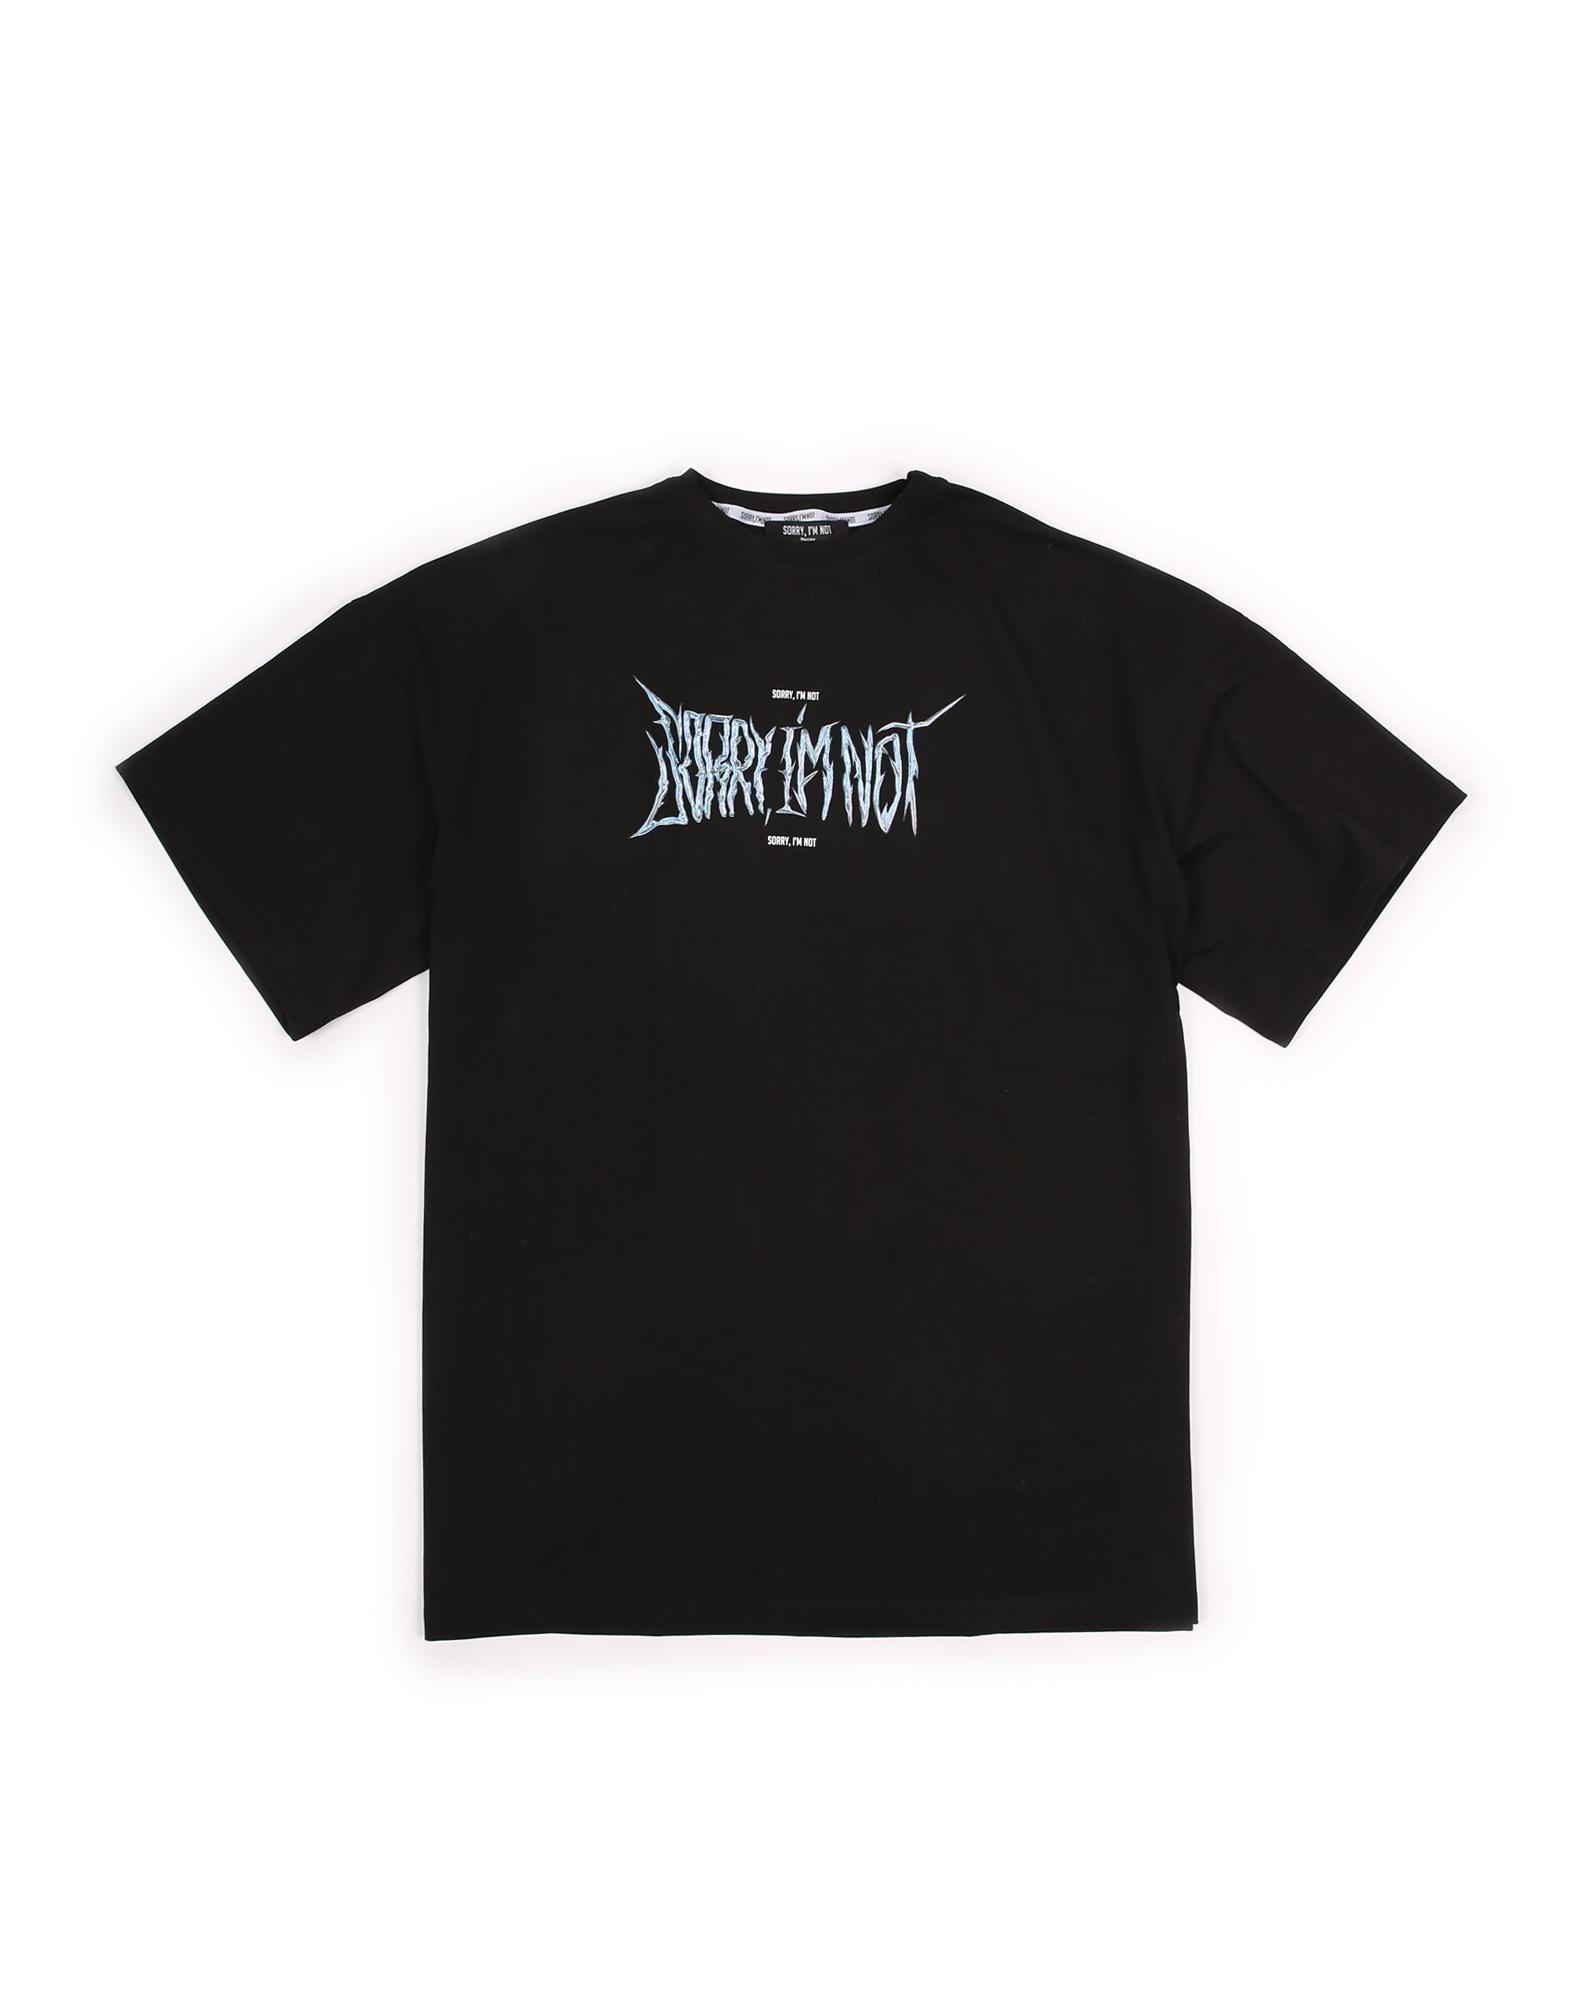 T Shirt Black Metal Oversized Sorryiamnot